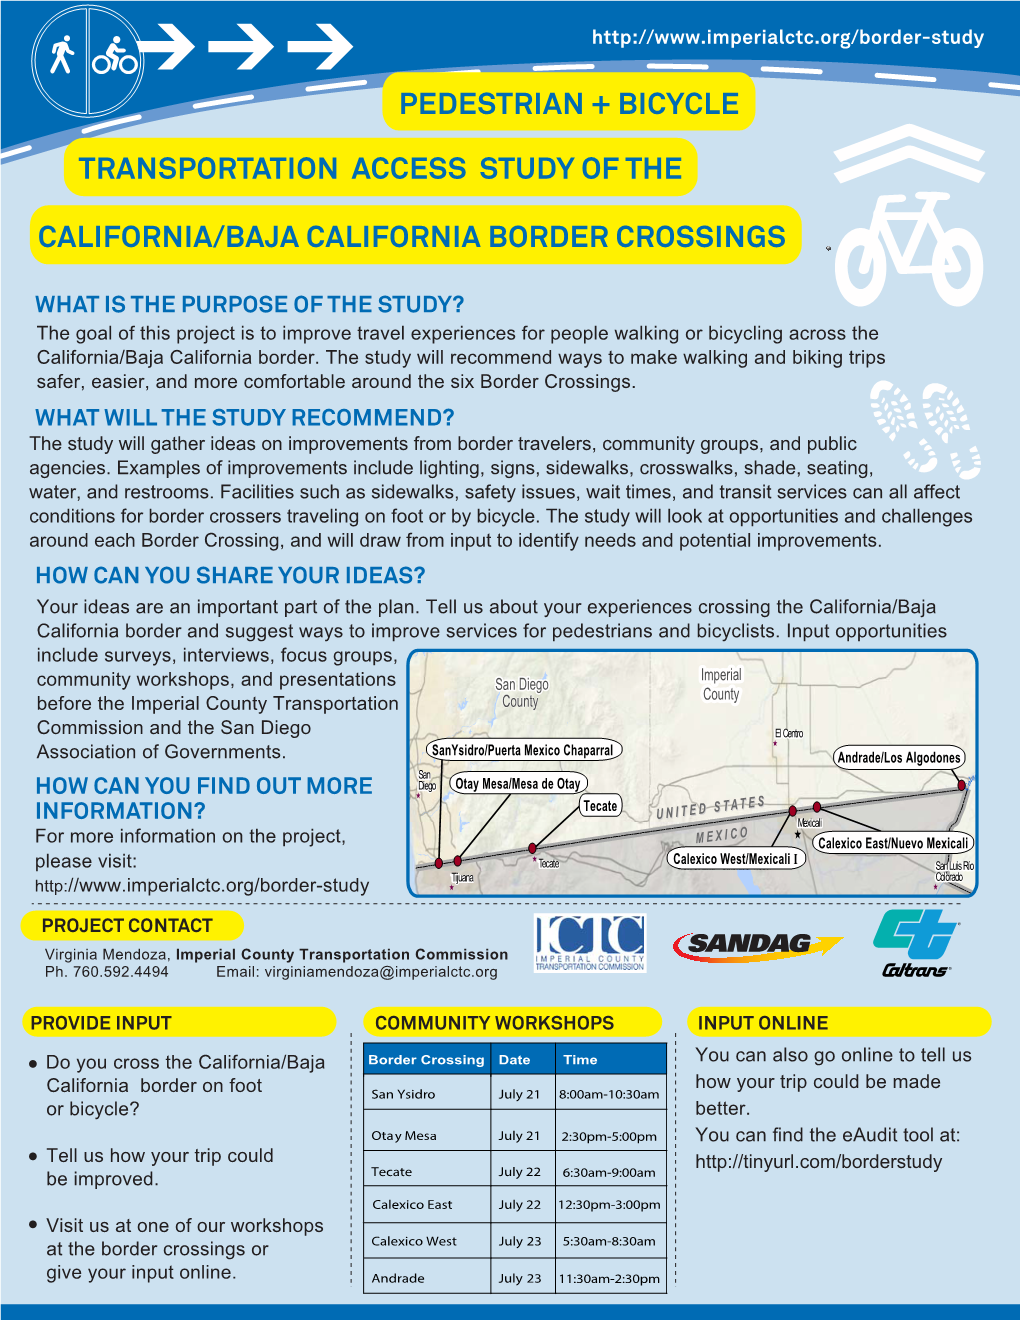 Pedestrian + Bicycle Transportation Access Study of the California/Baja California Border Crossings